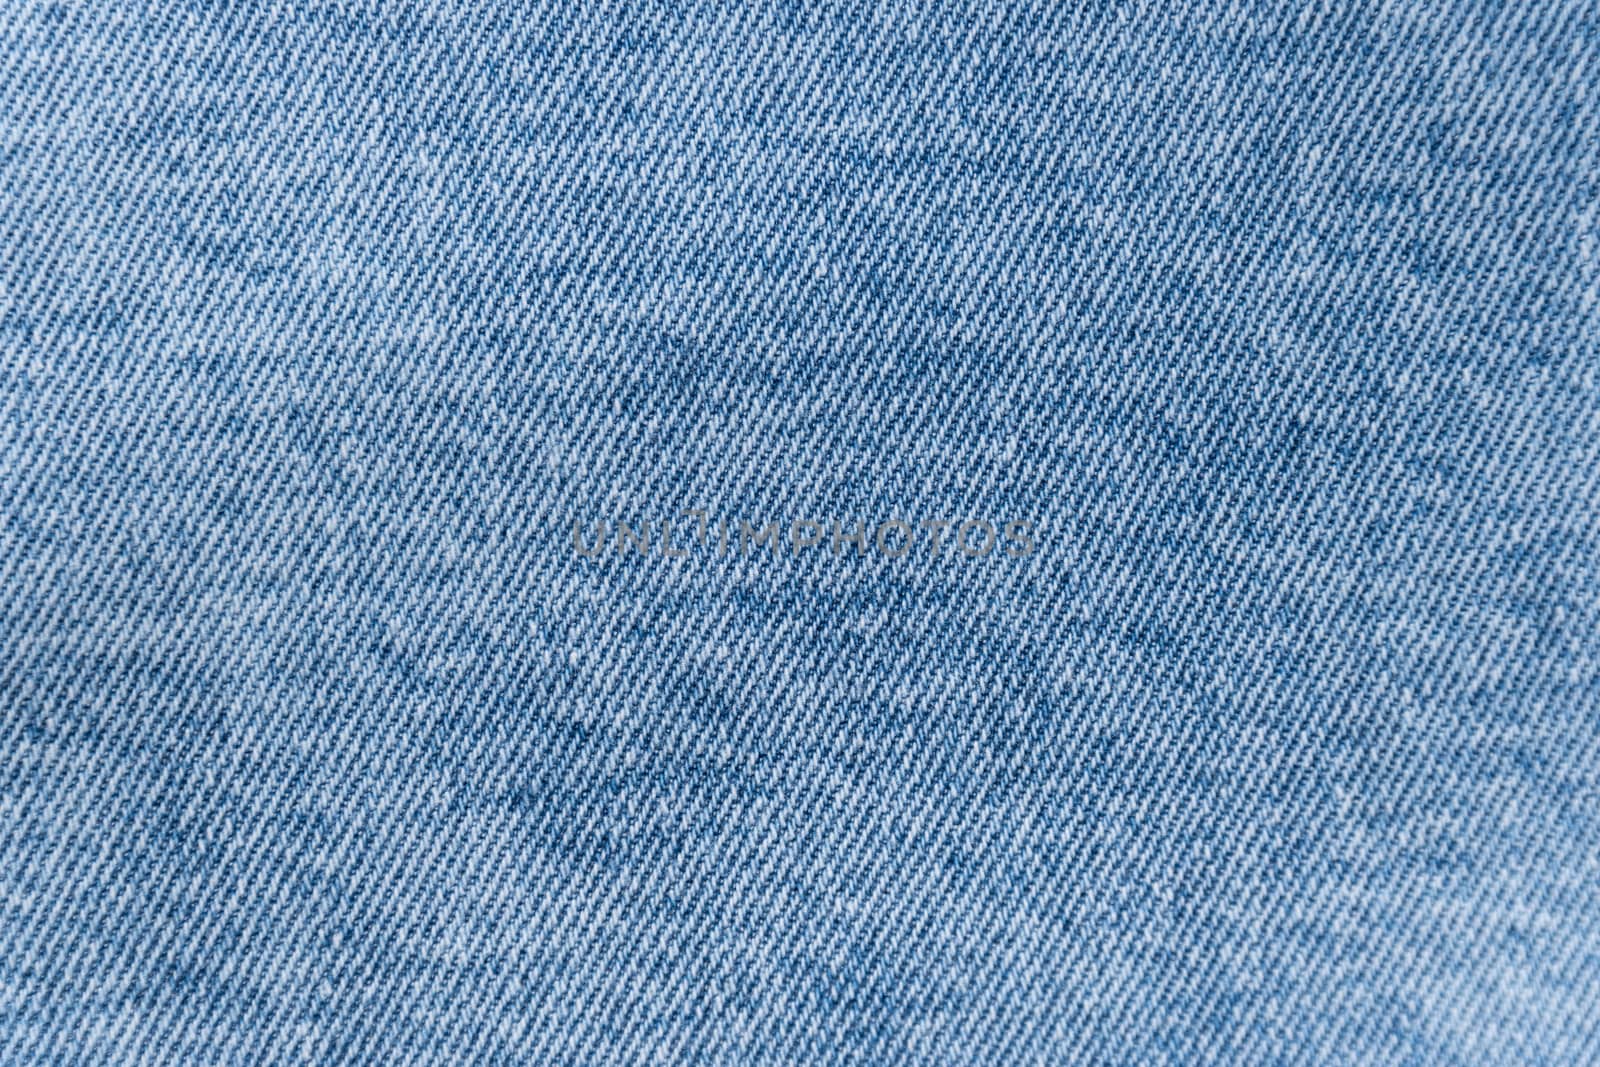 Mottled fabric denim style fine stuff soft material light blue by MXW_Stock